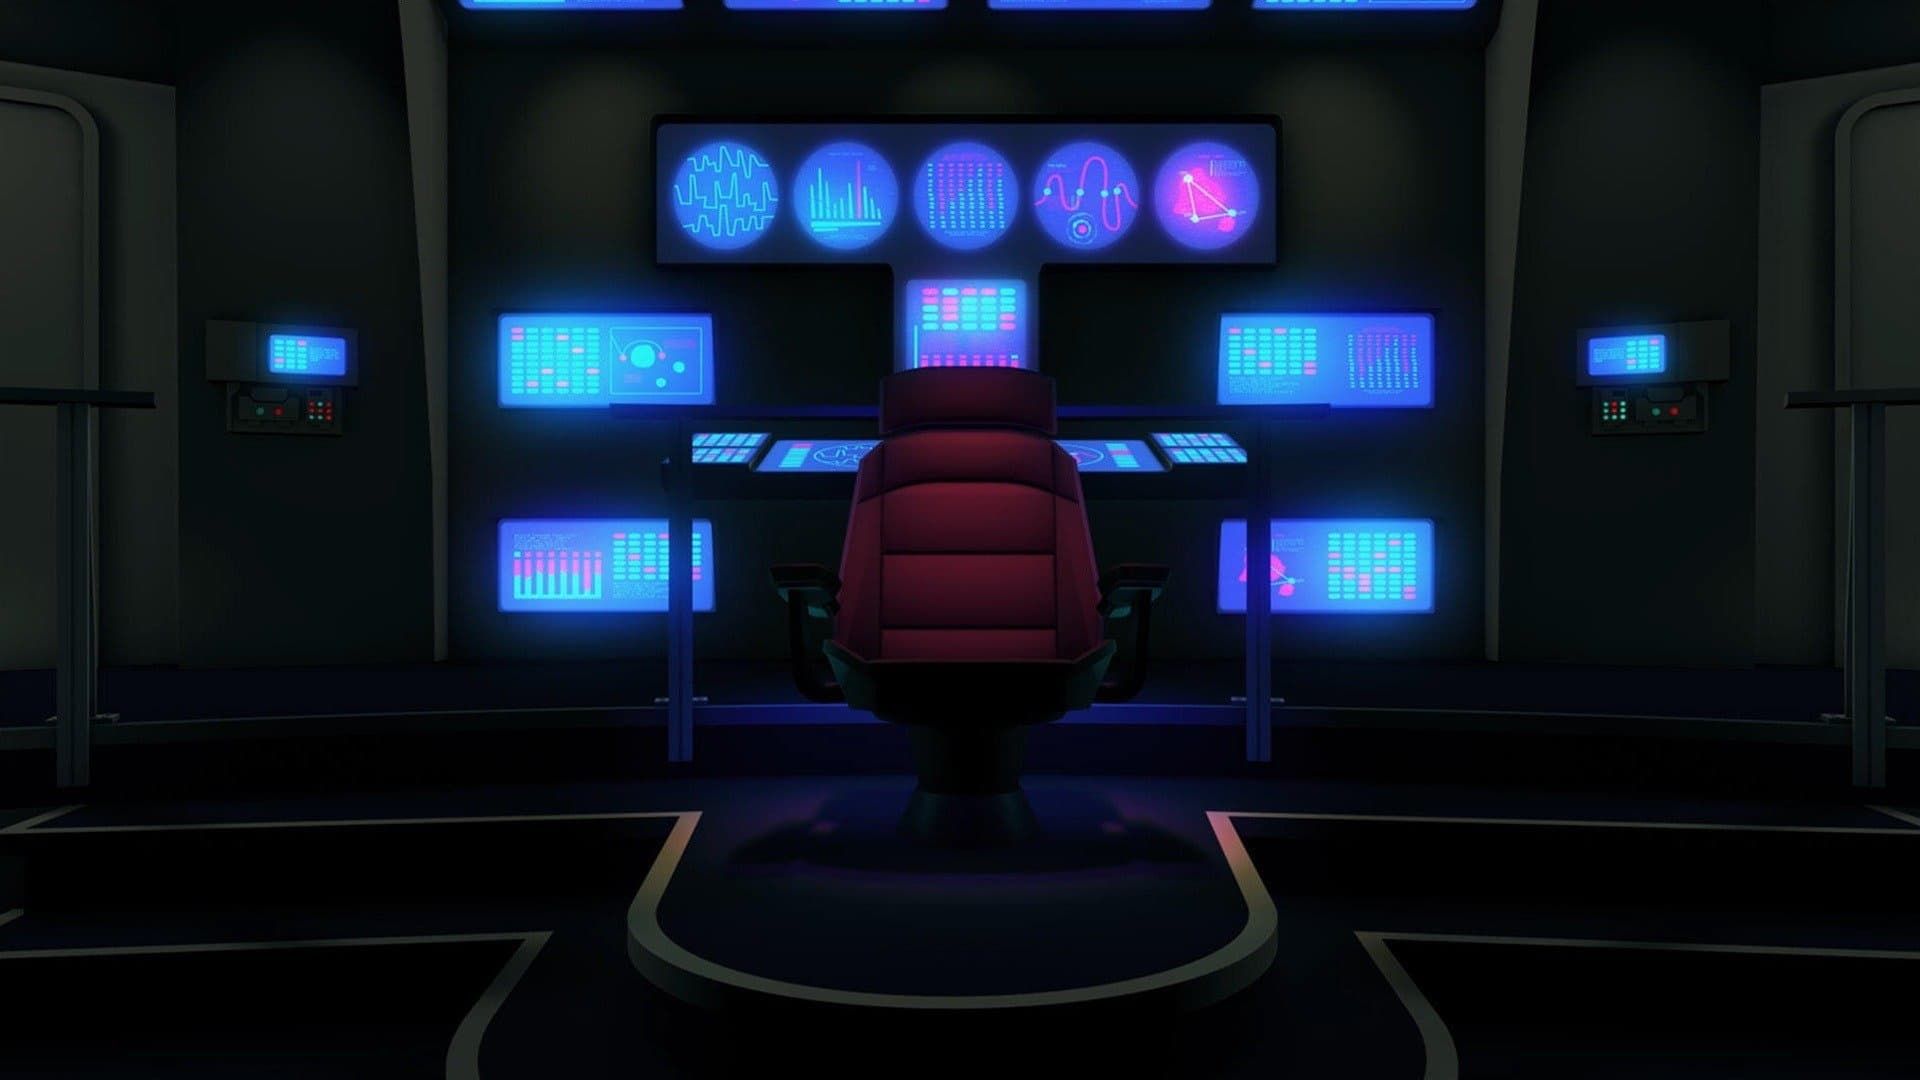 The Center Seat: 55 Years of Star Trek background